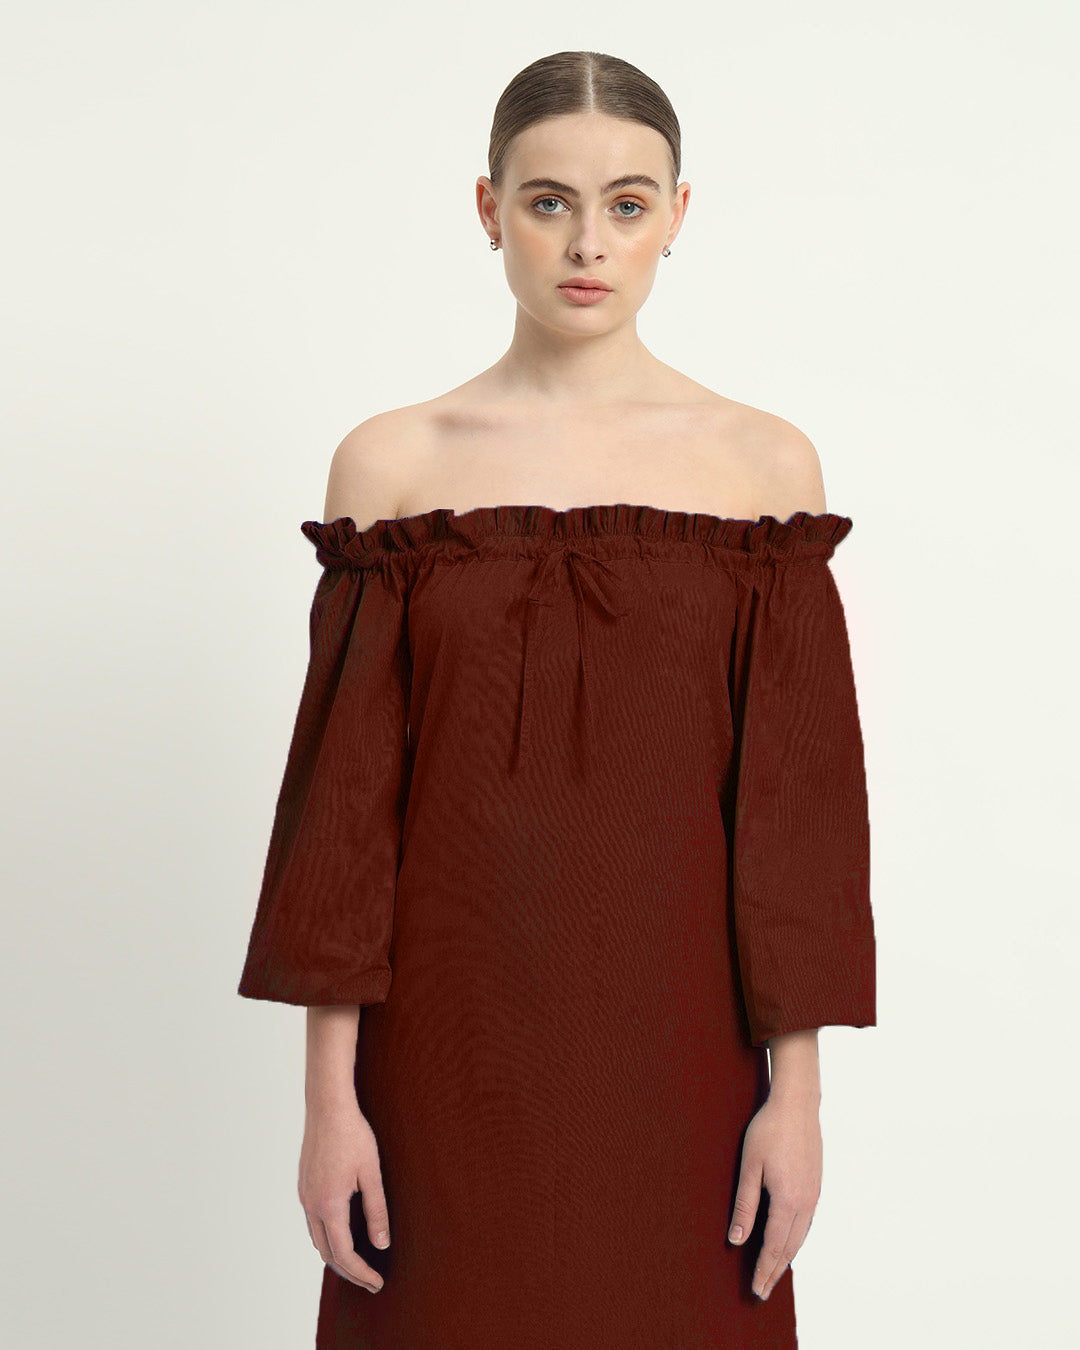 The Rouge Carlisle Cotton Dress